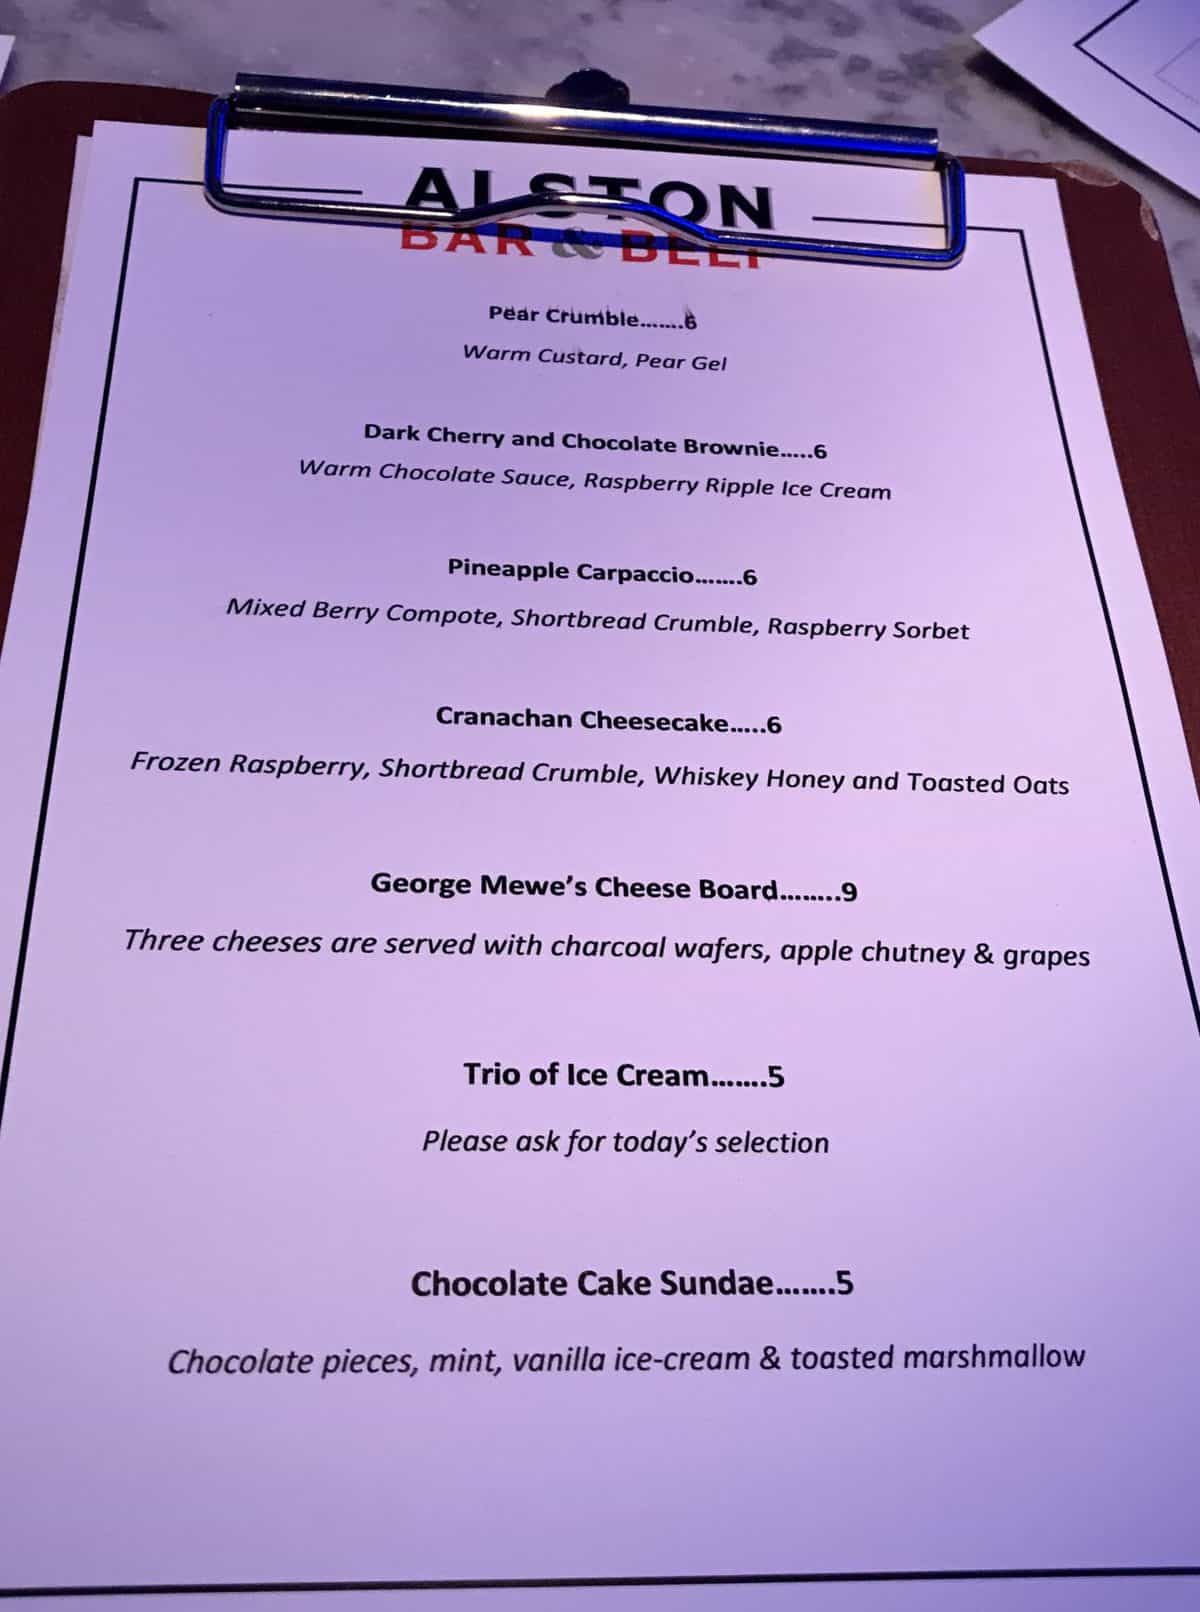 Alston bar and beef dessert menu